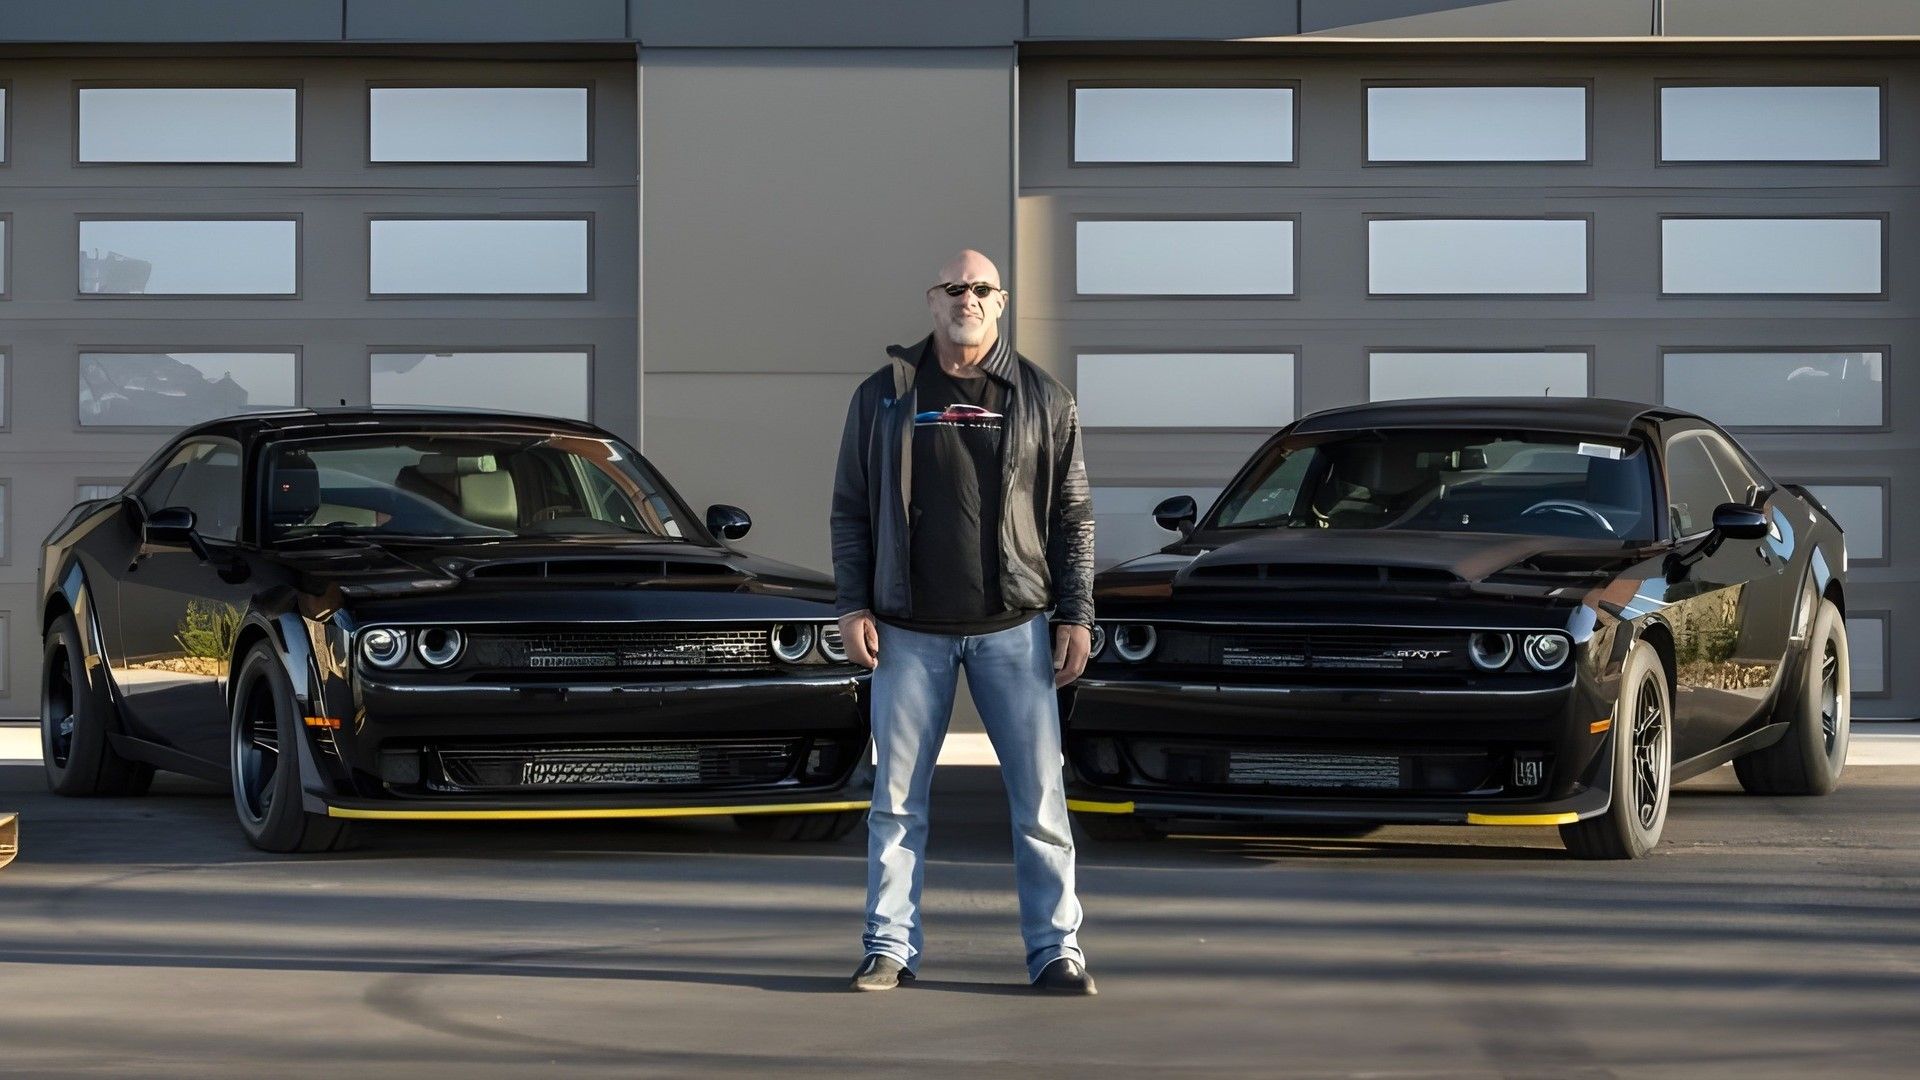 A Pitch Black 2018 Dodge Challenger SRT Demon and a Pitch Black 2023 Dodge Challenger SRT Demon 170 with Bill Goldberg front shot